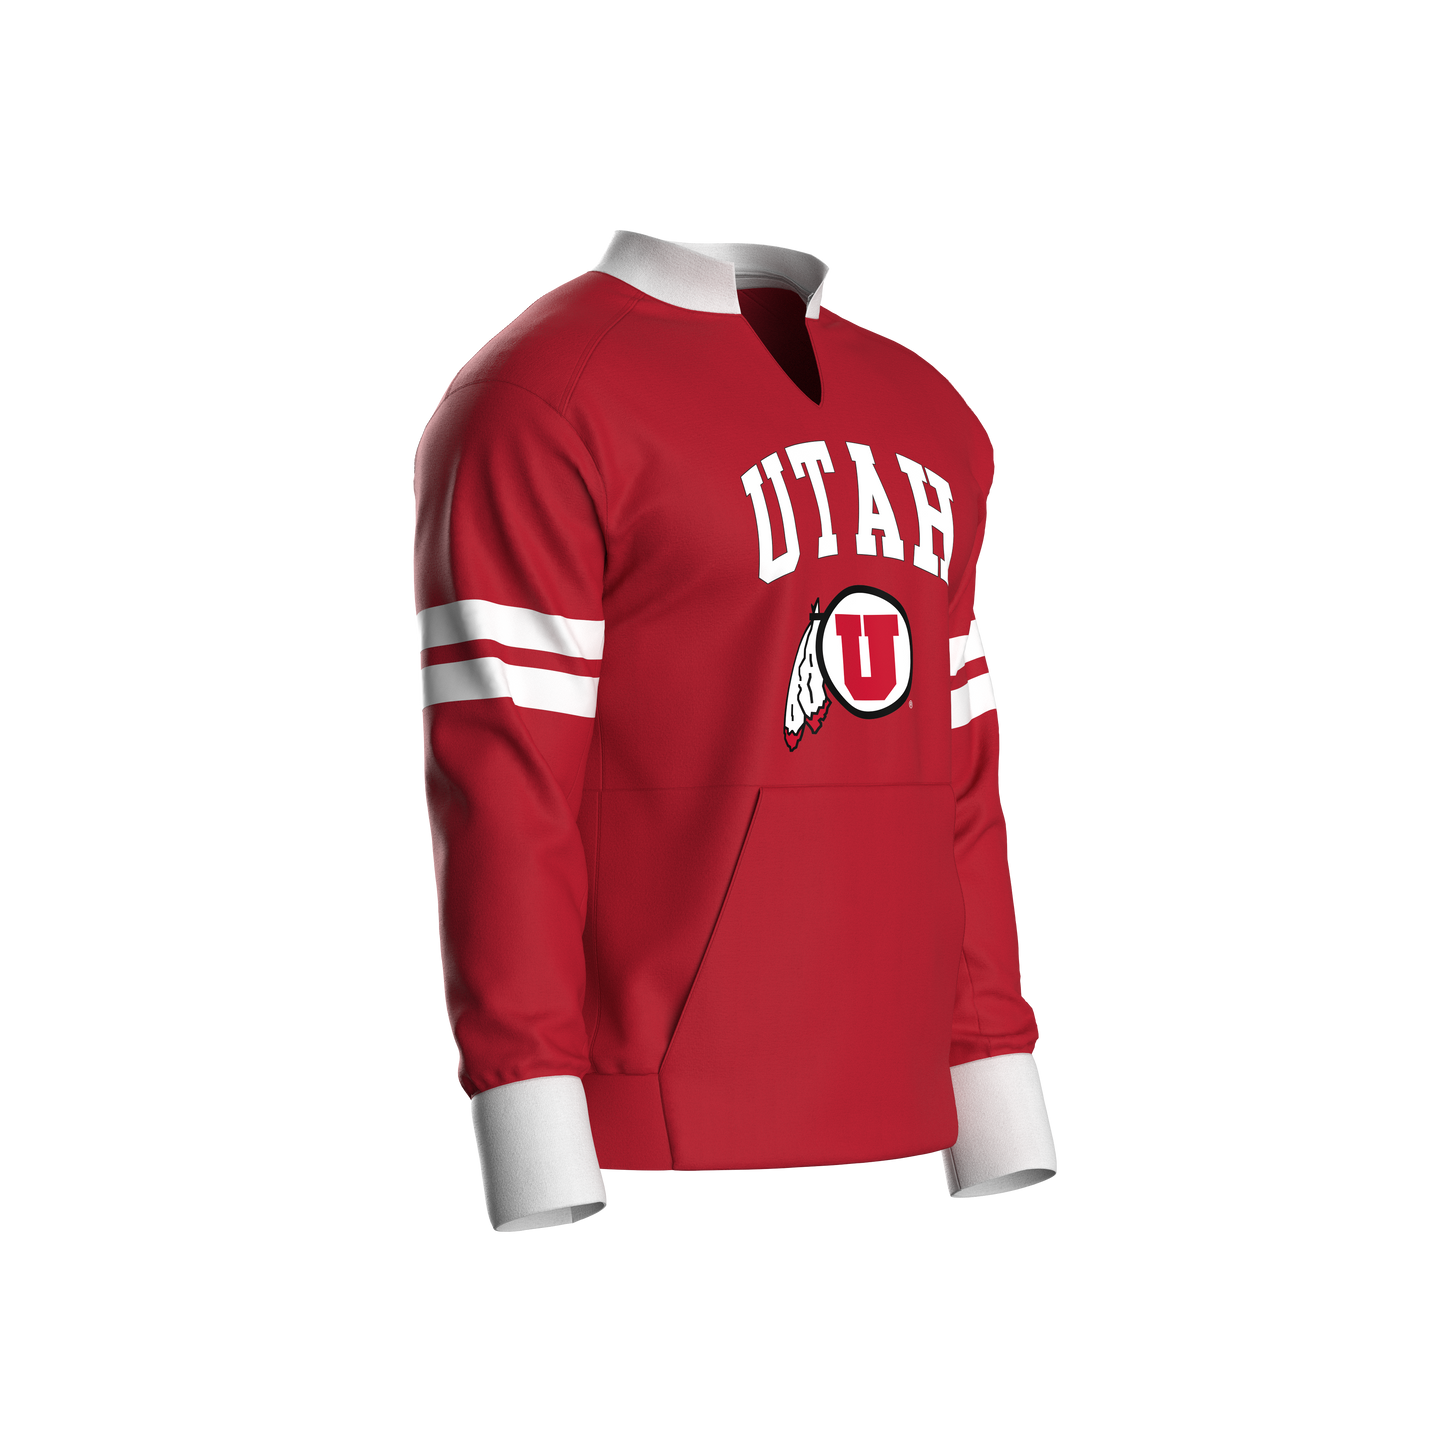 University of Utah Home Pullover (adult)